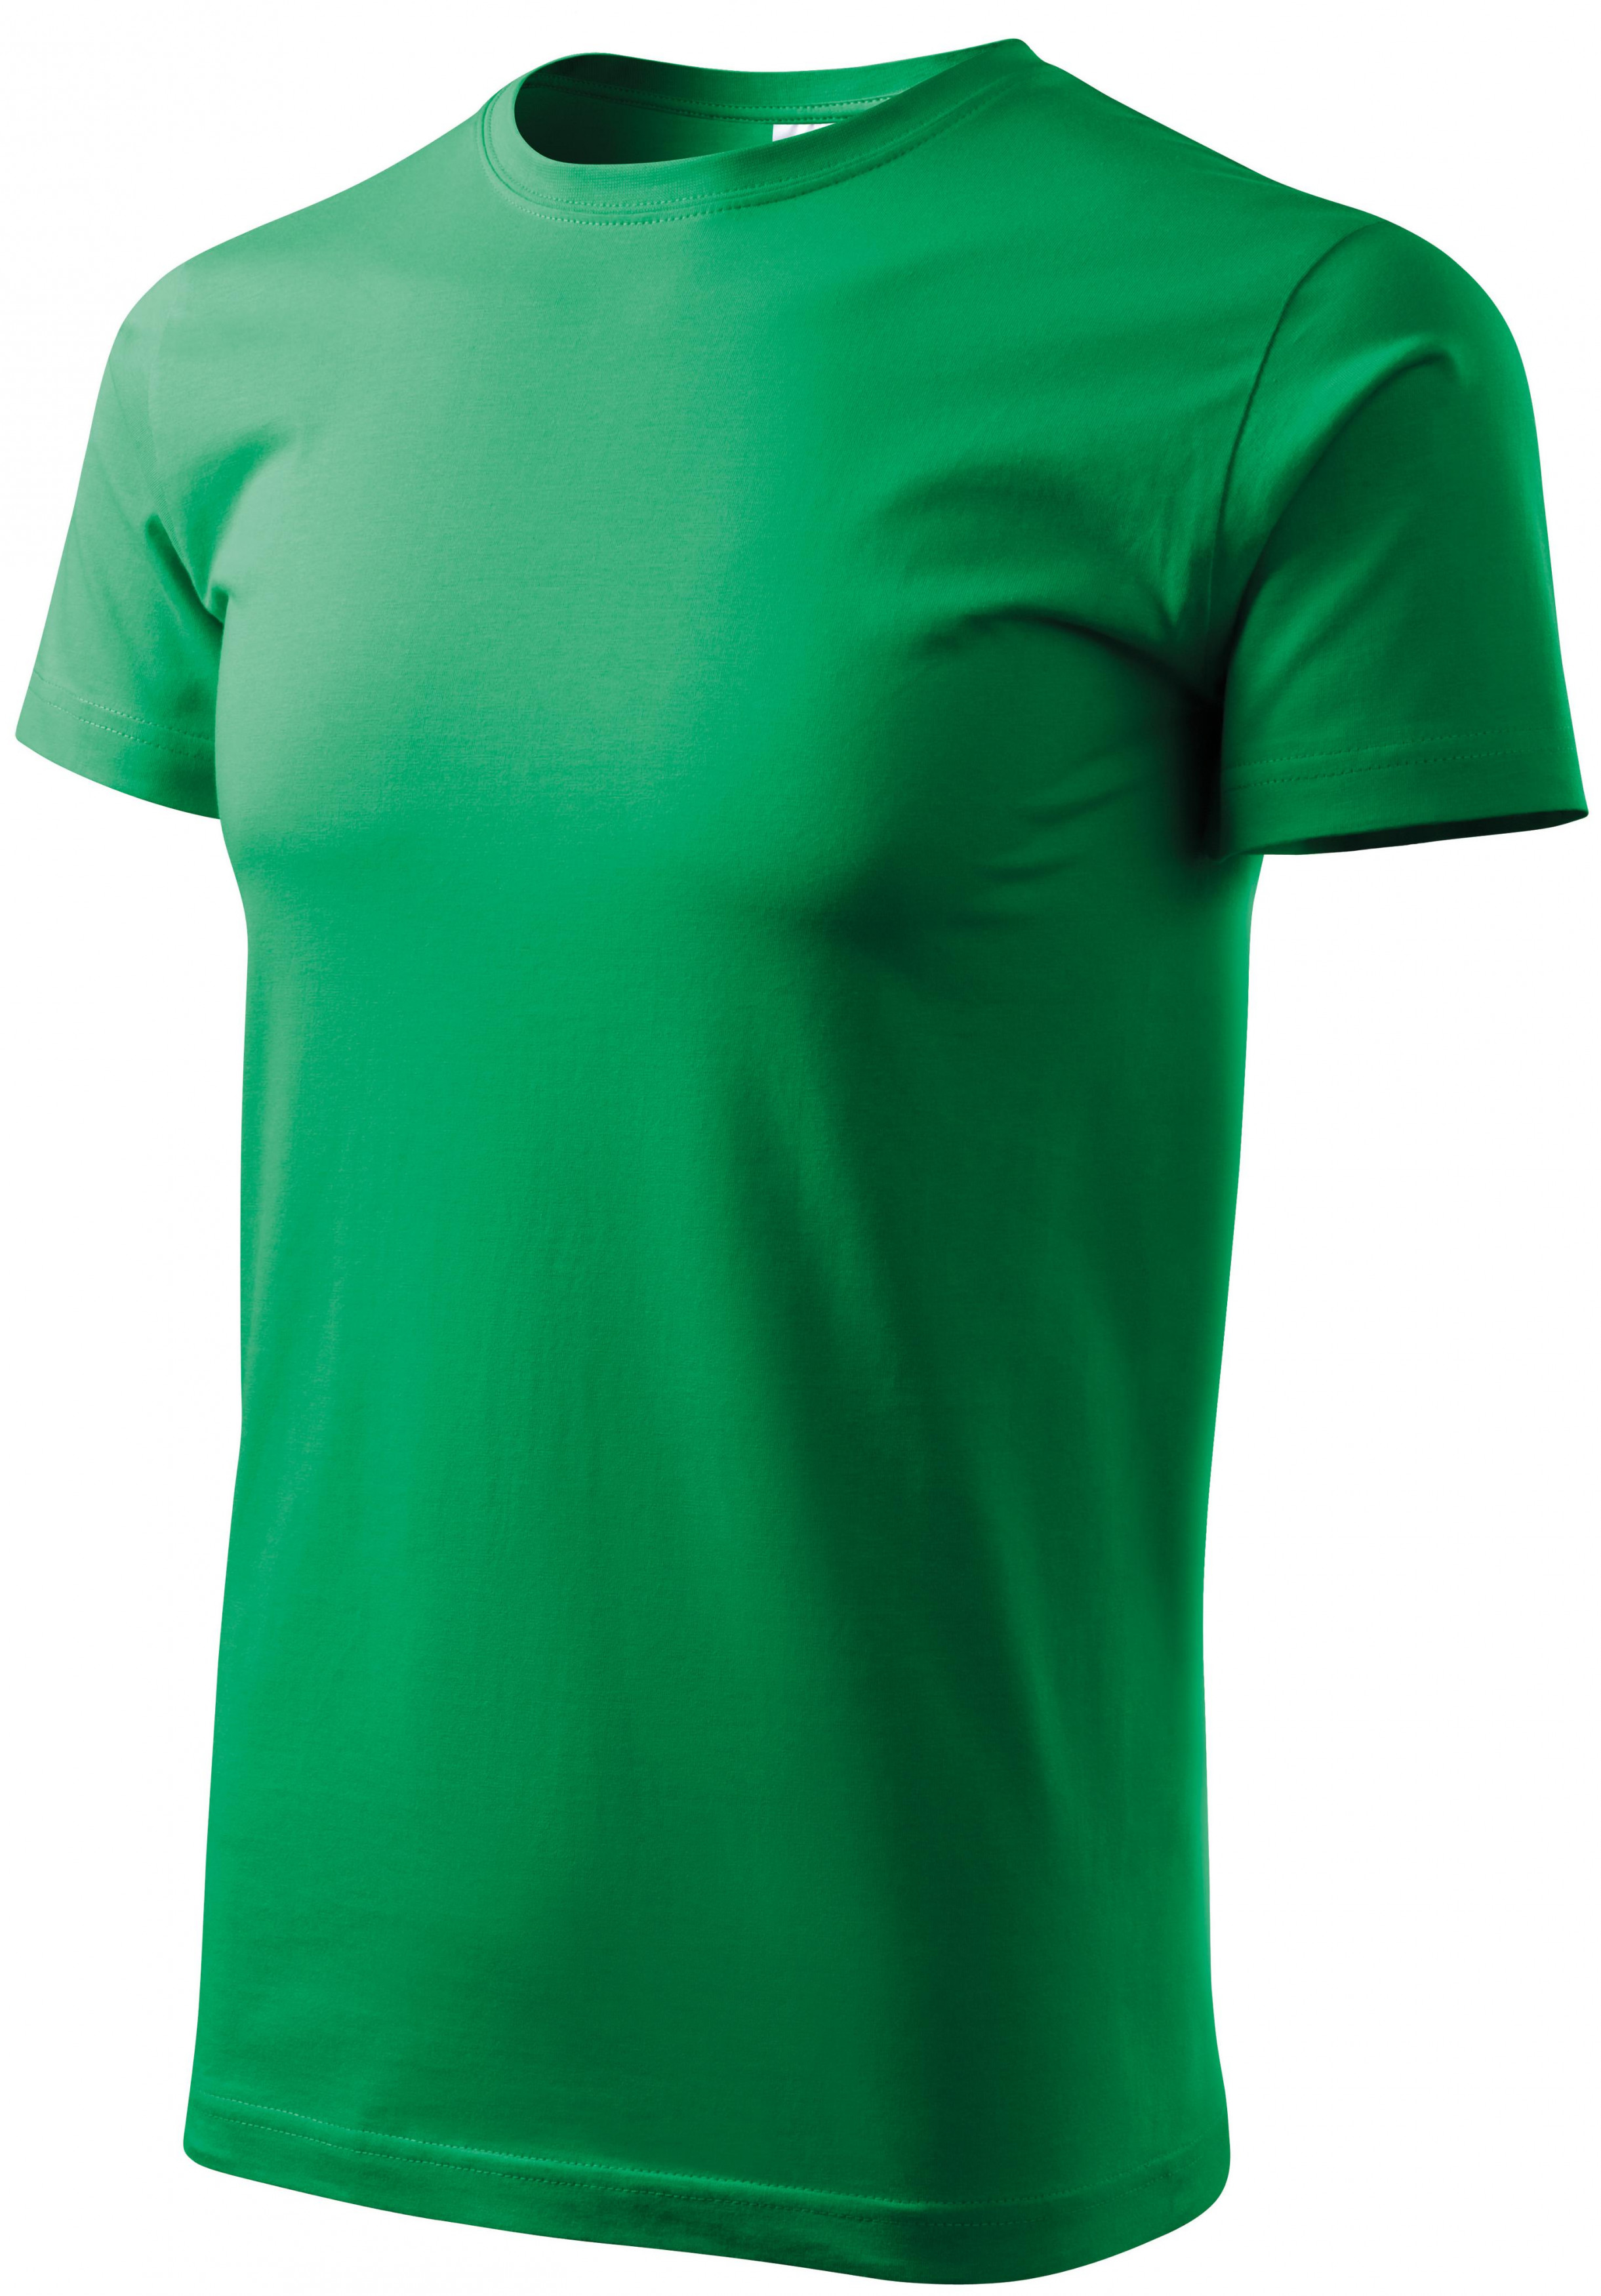 Unisex nagyobb súlyú póló, zöld fű, M